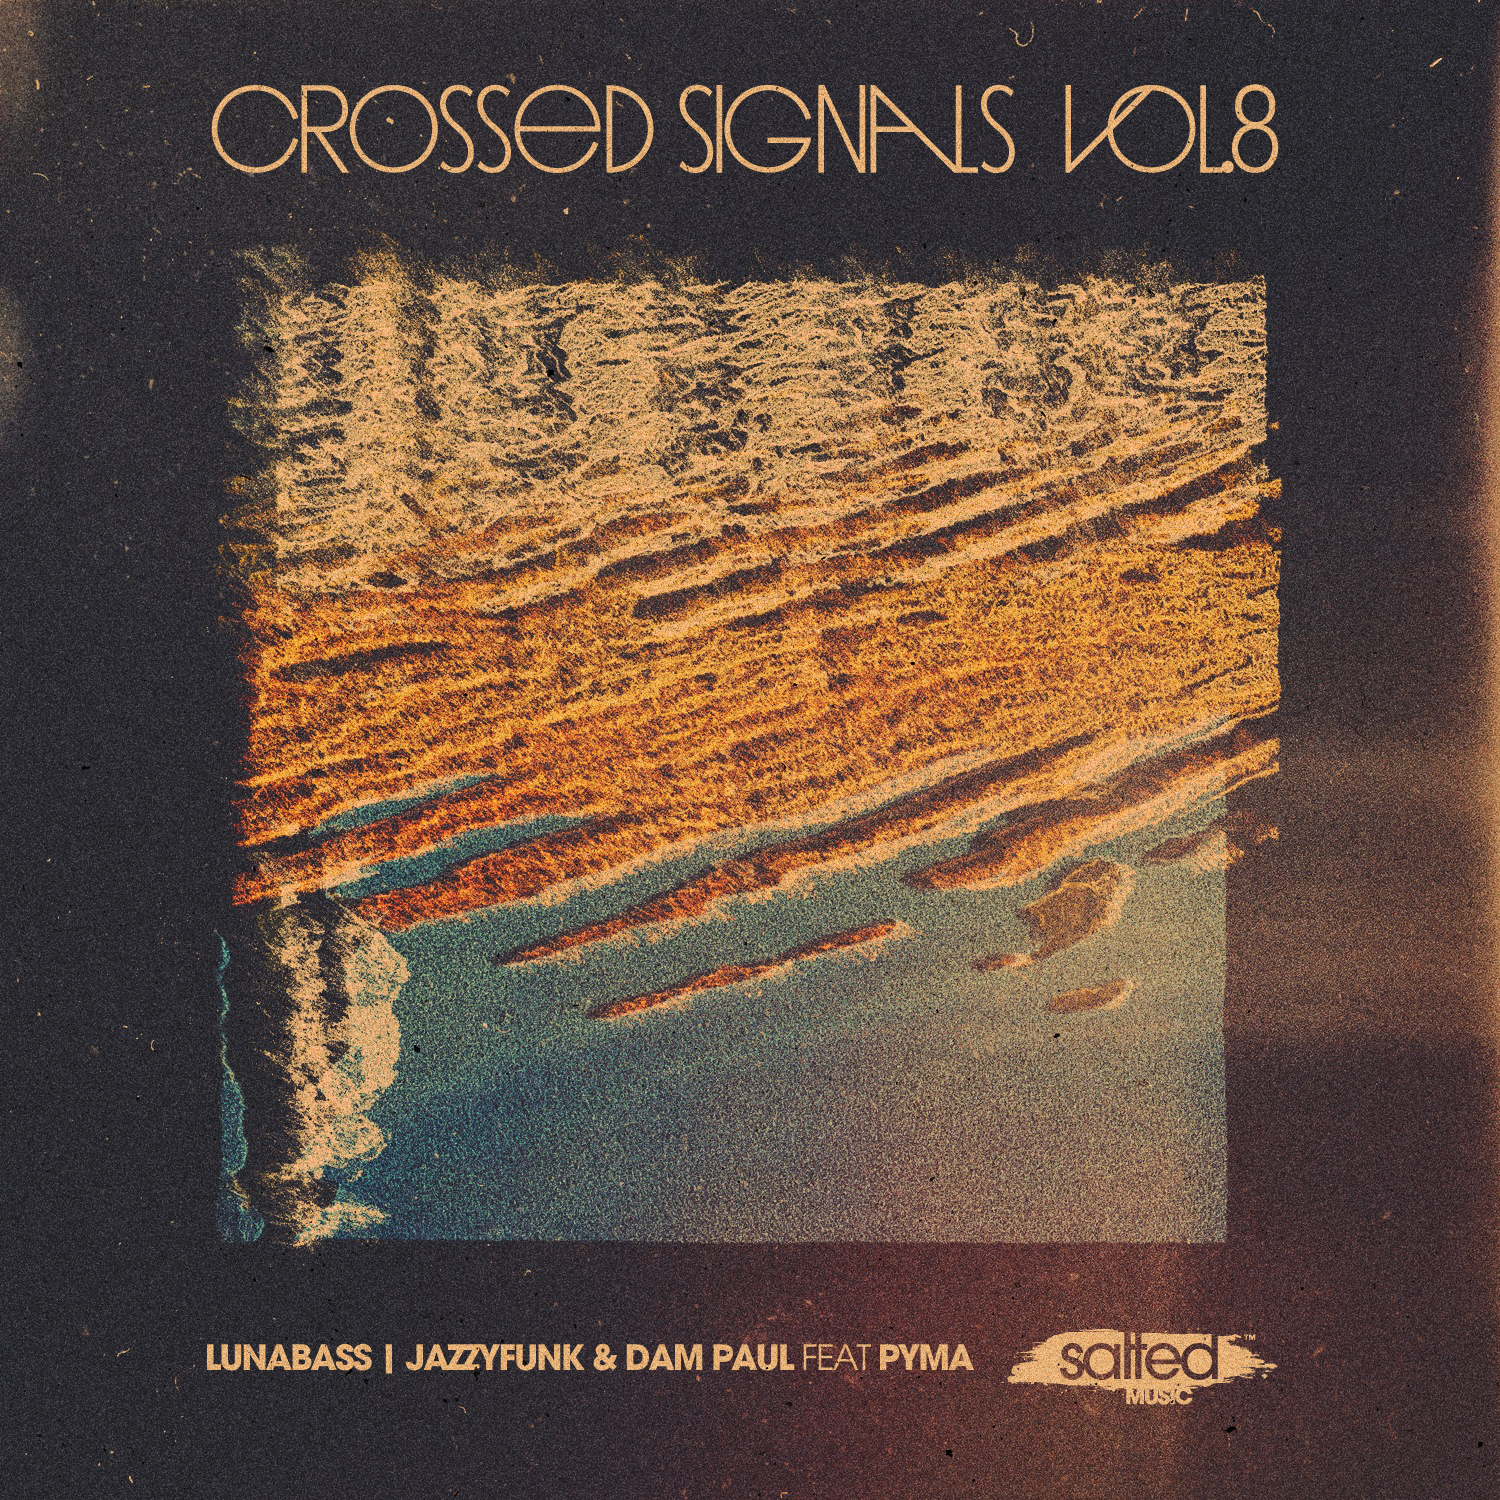 SLT165: Crossed Signals Vol. 8 – Lunabass, Jazzyfunk & Dam Paul feat Pyma (Salted Music)